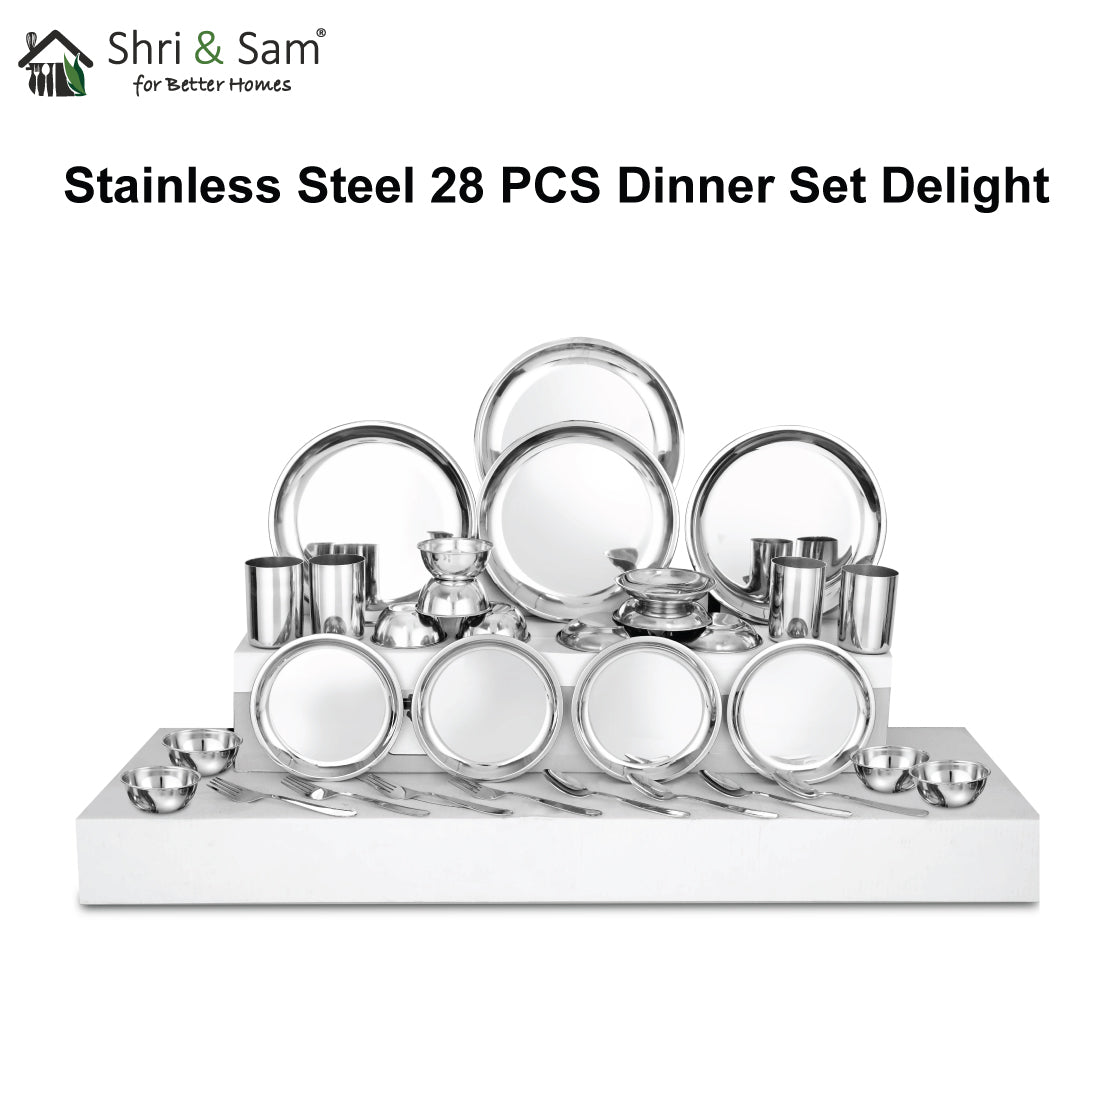 Stainless Steel 28 PCS Dinner set (4 People) Delight